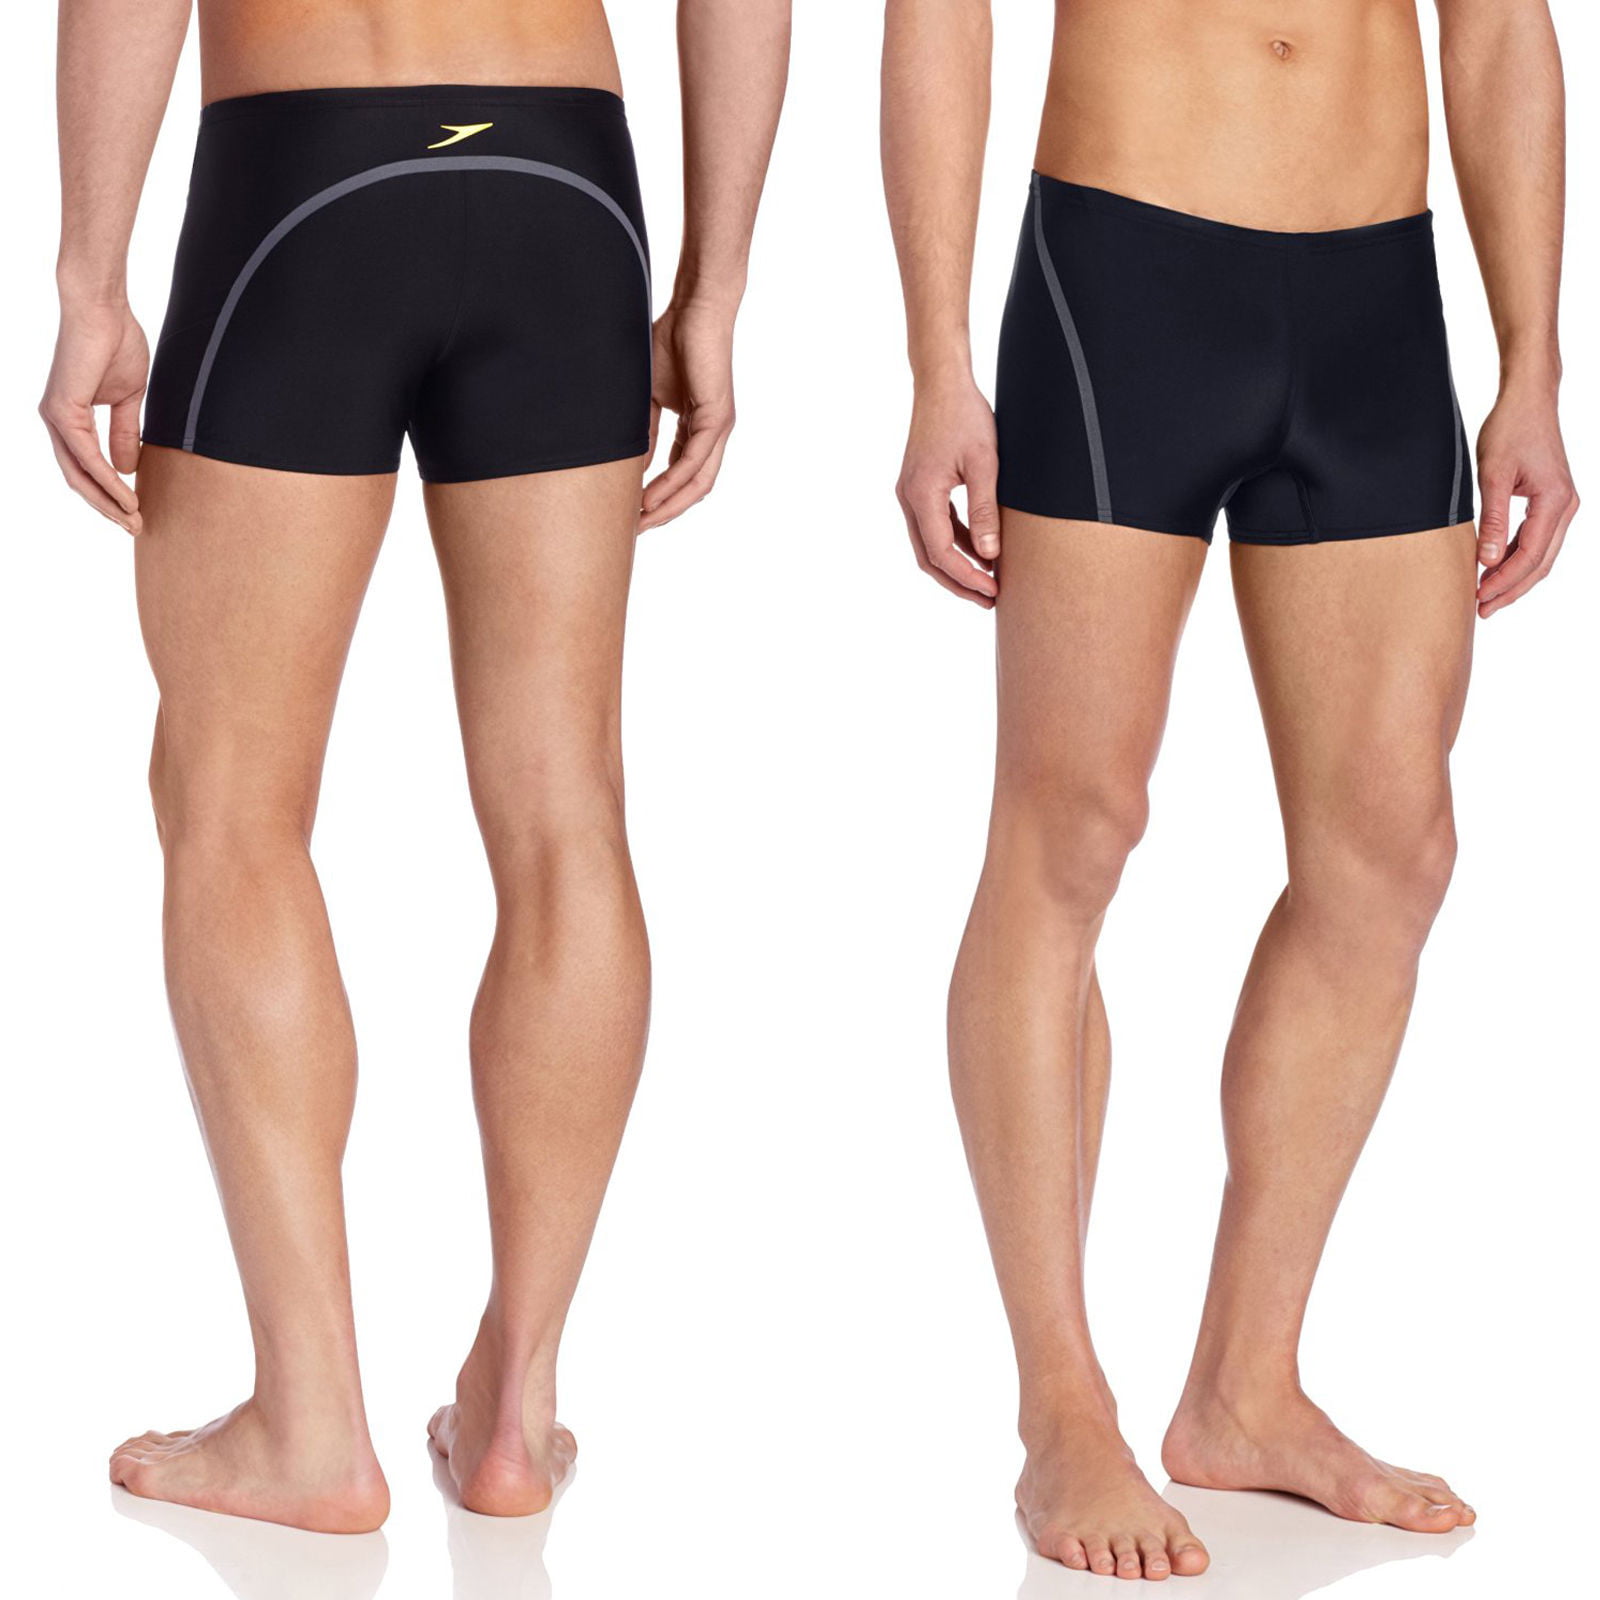 Vocni Mens Solid Fashion Jammer Rapid Quick Dry Square Leg Swimsuit Swimwear for Men